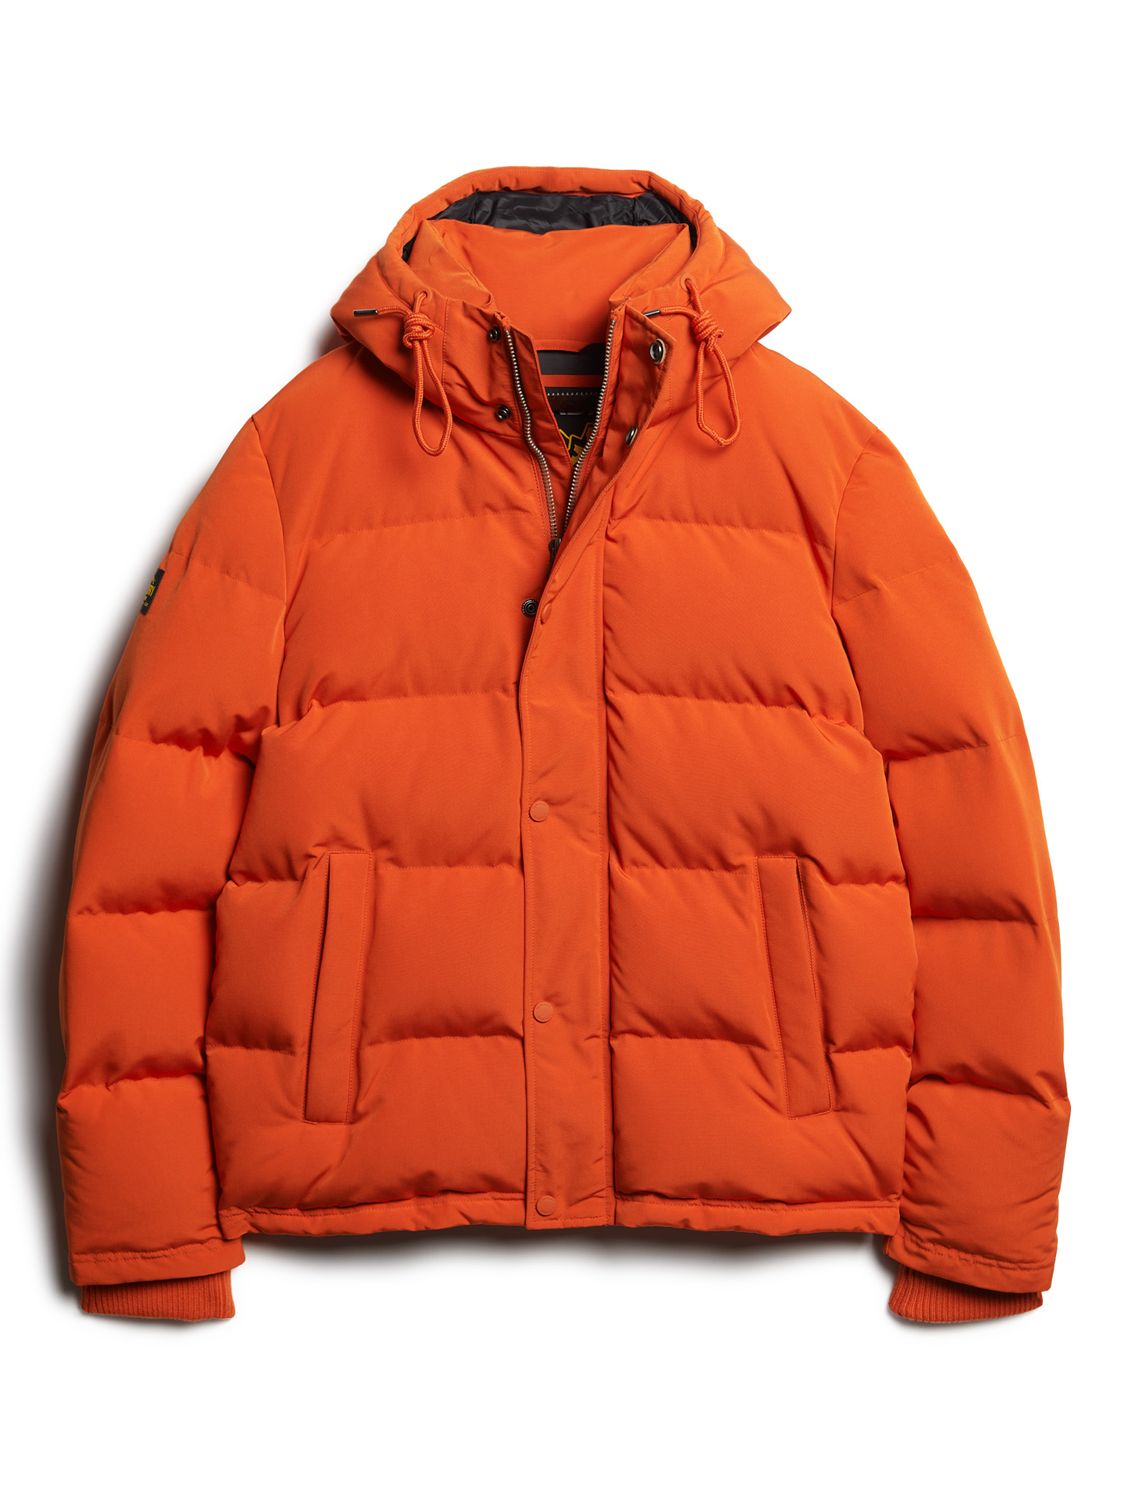 Superdry Everest Hooded Puffer Jacket, Pureed Pumpkin at John Lewis ...